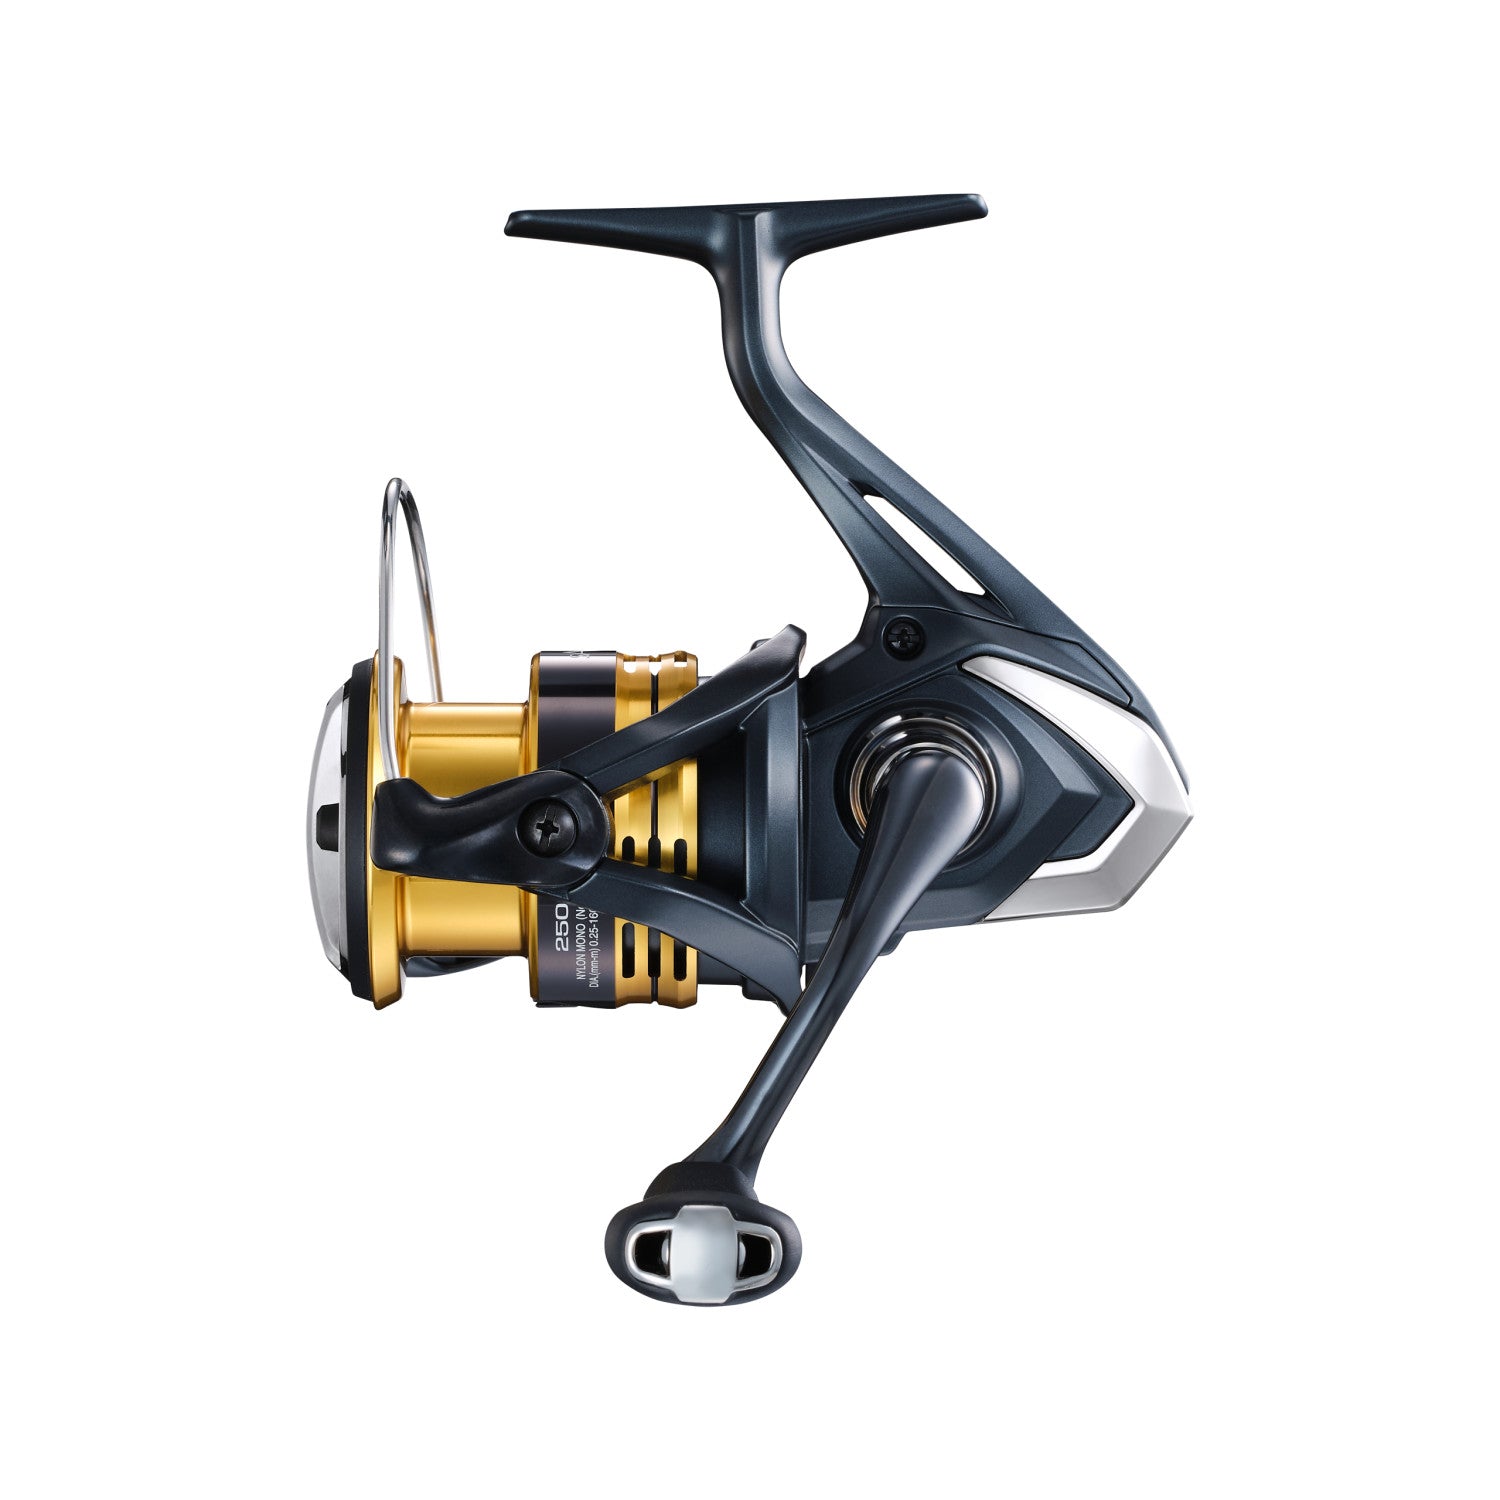 Shimano Ultegra FB - Fishing reel, Hagane gear, Model 2017, Spinning Reels  -  Canada